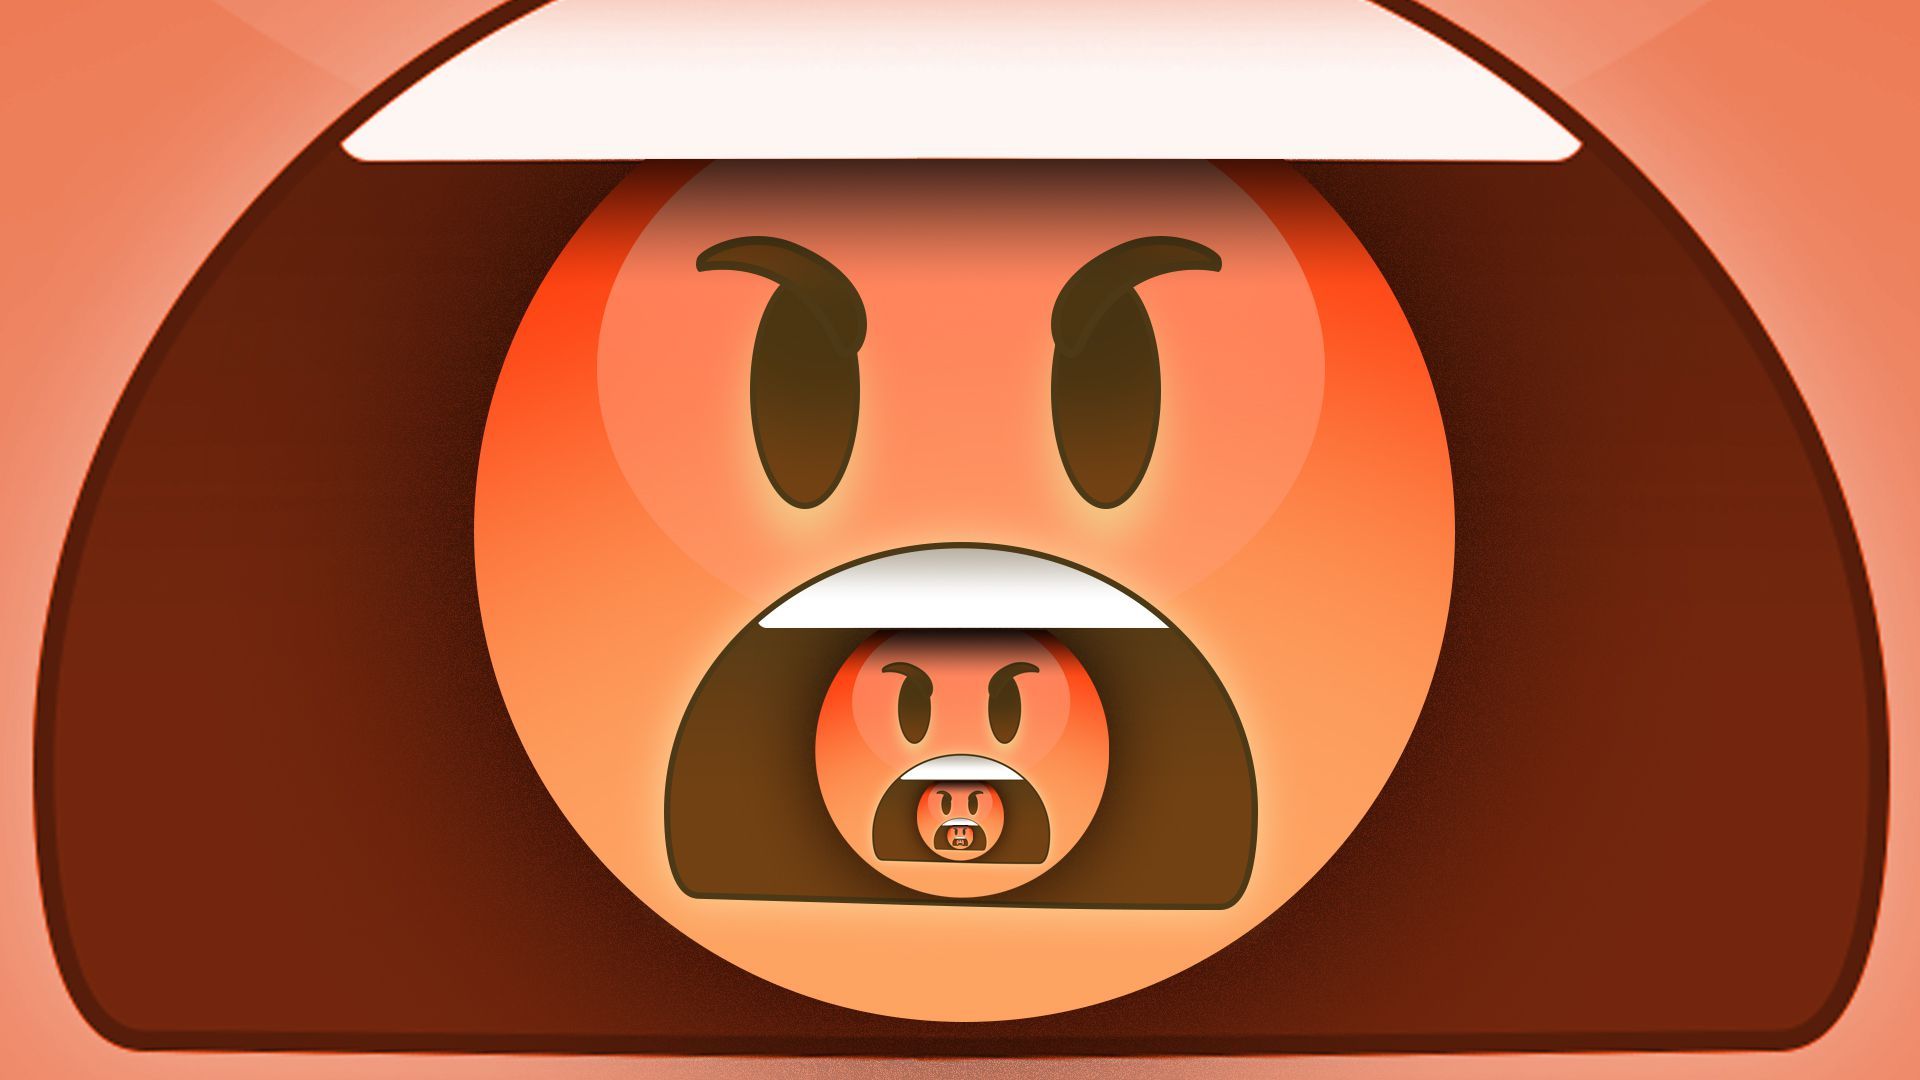 troll - Discord Emoji